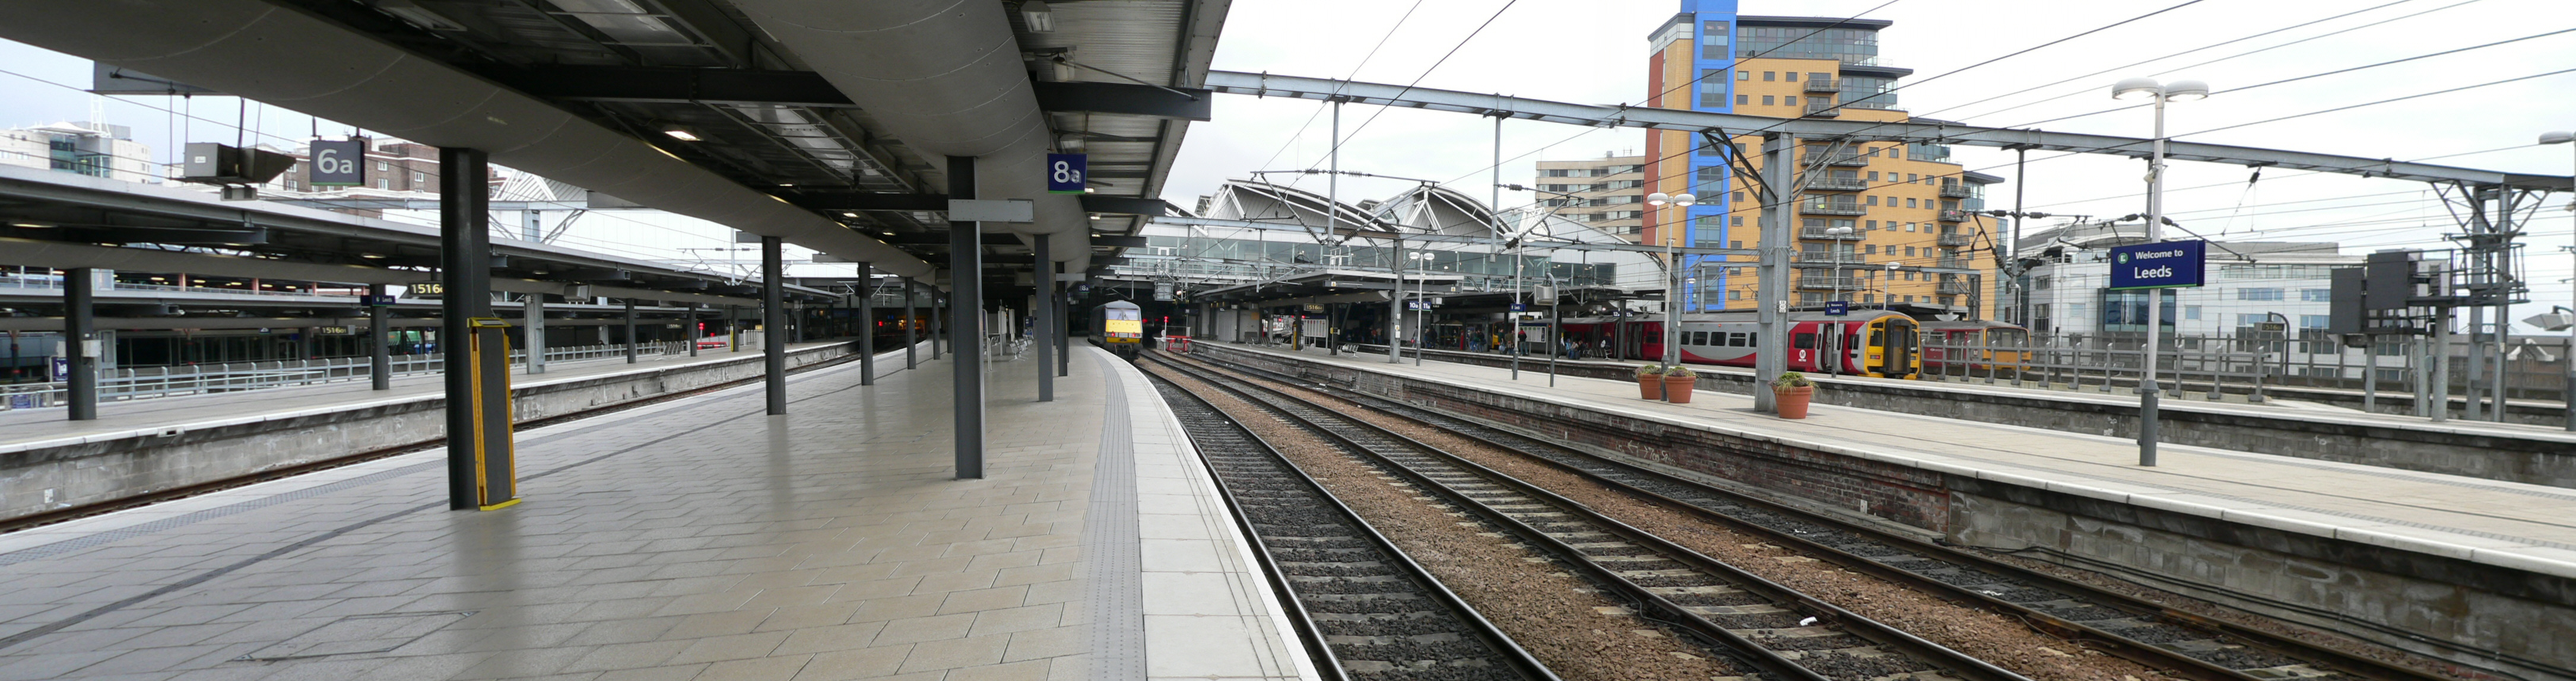 File:Leeds City Railway station - western end 04.jpg - Wikimedia Commons